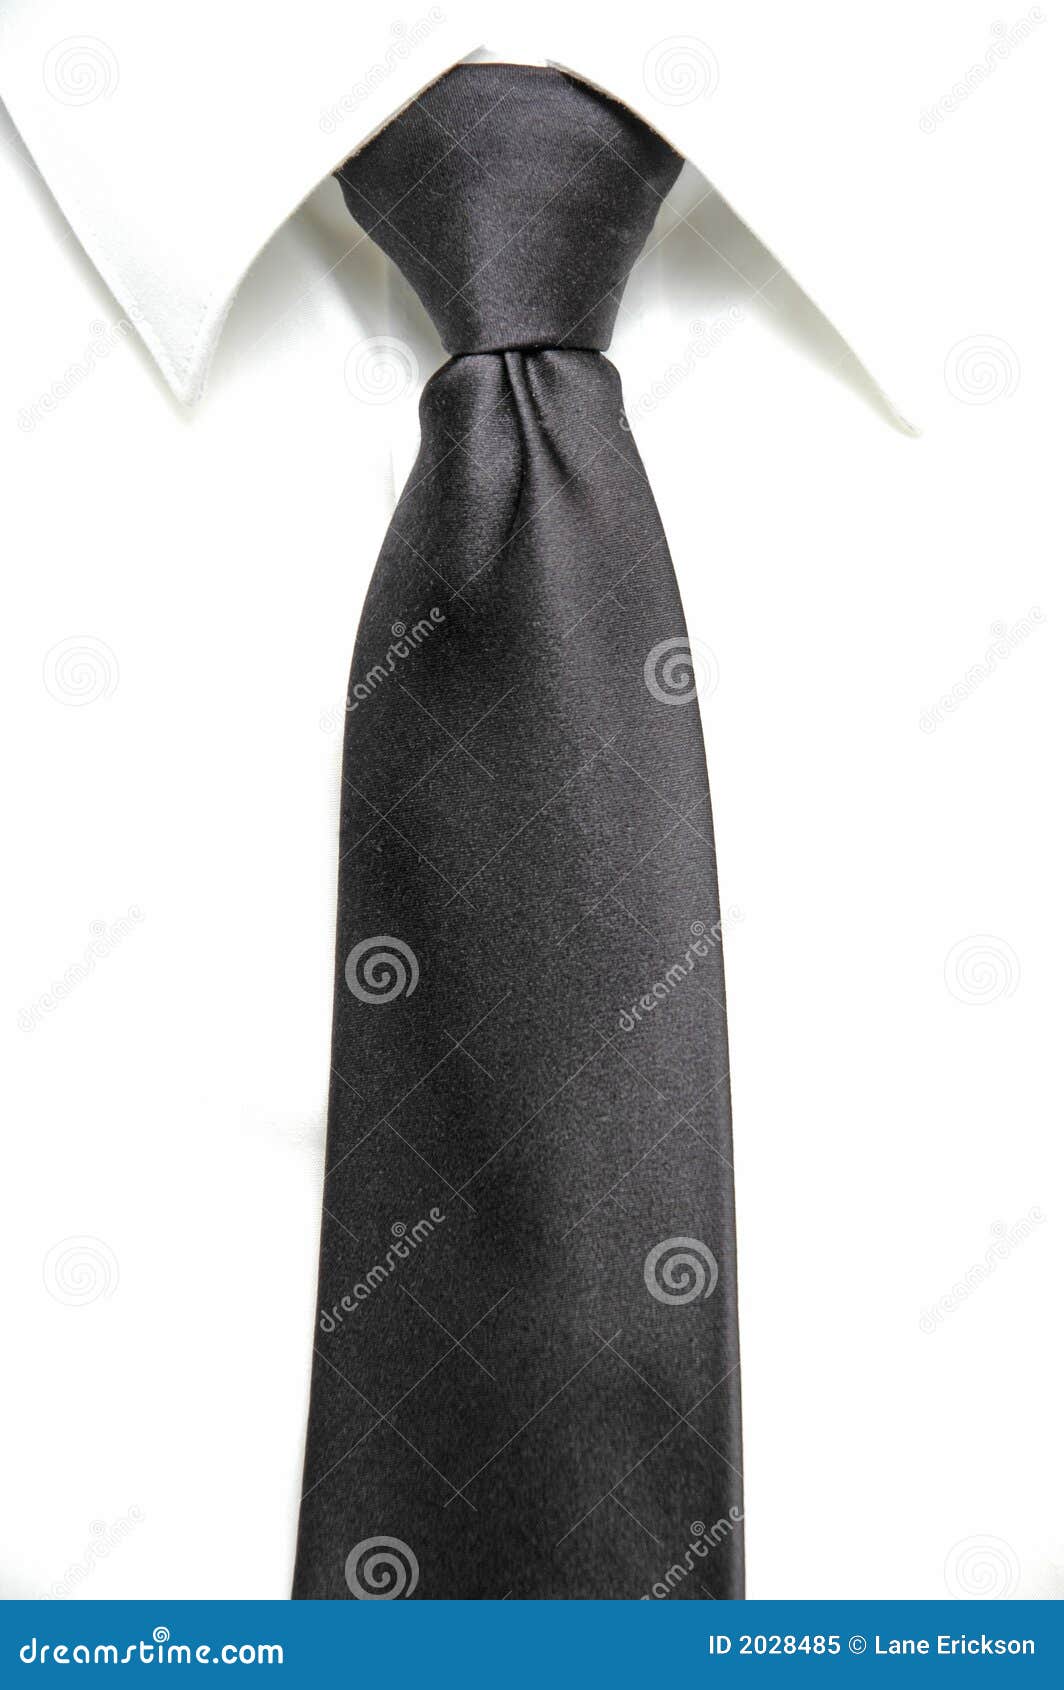 black tie